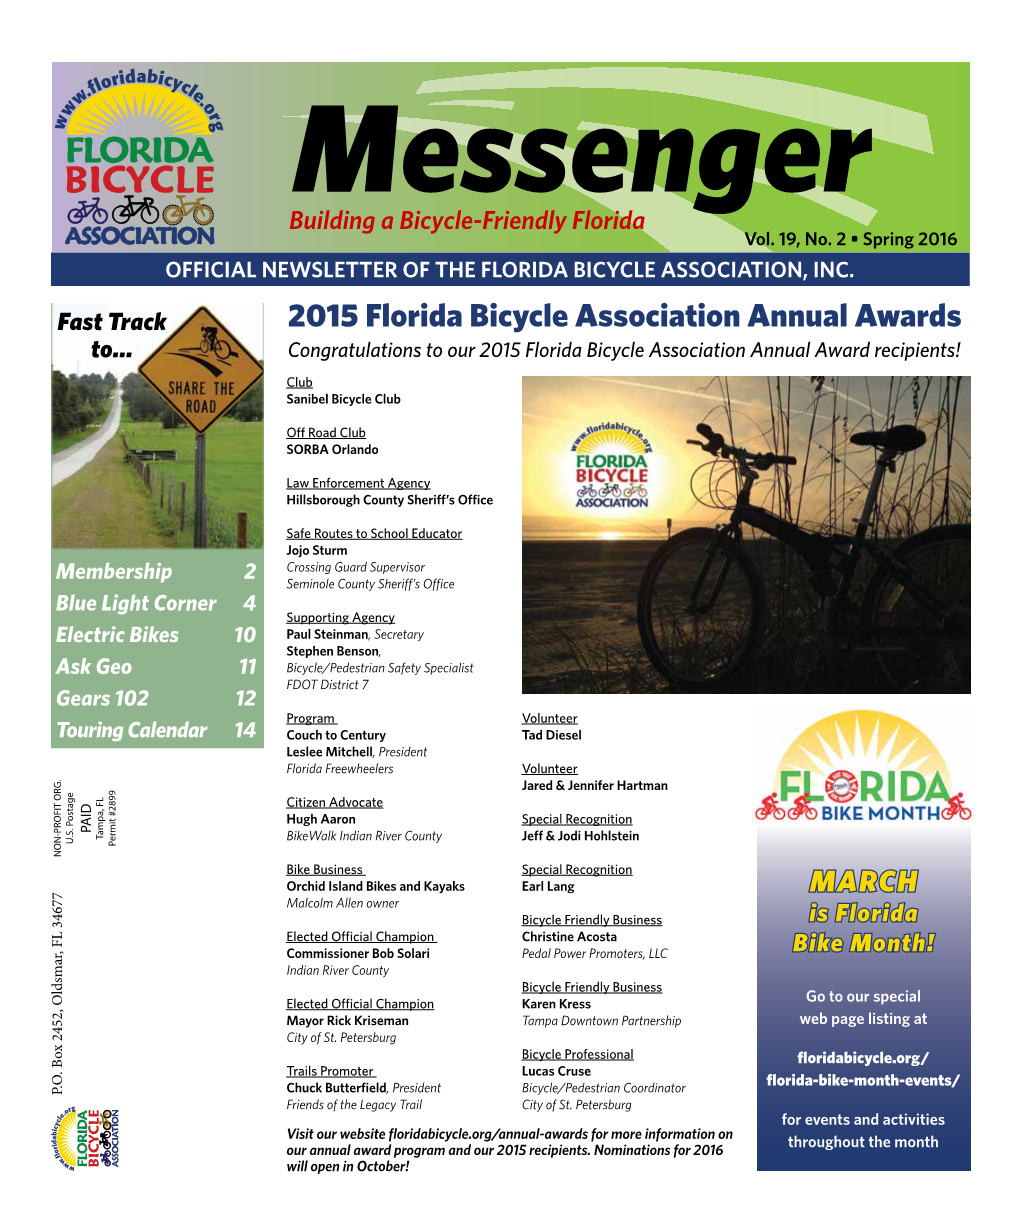 2015 Florida Bicycle Association Annual Awards To